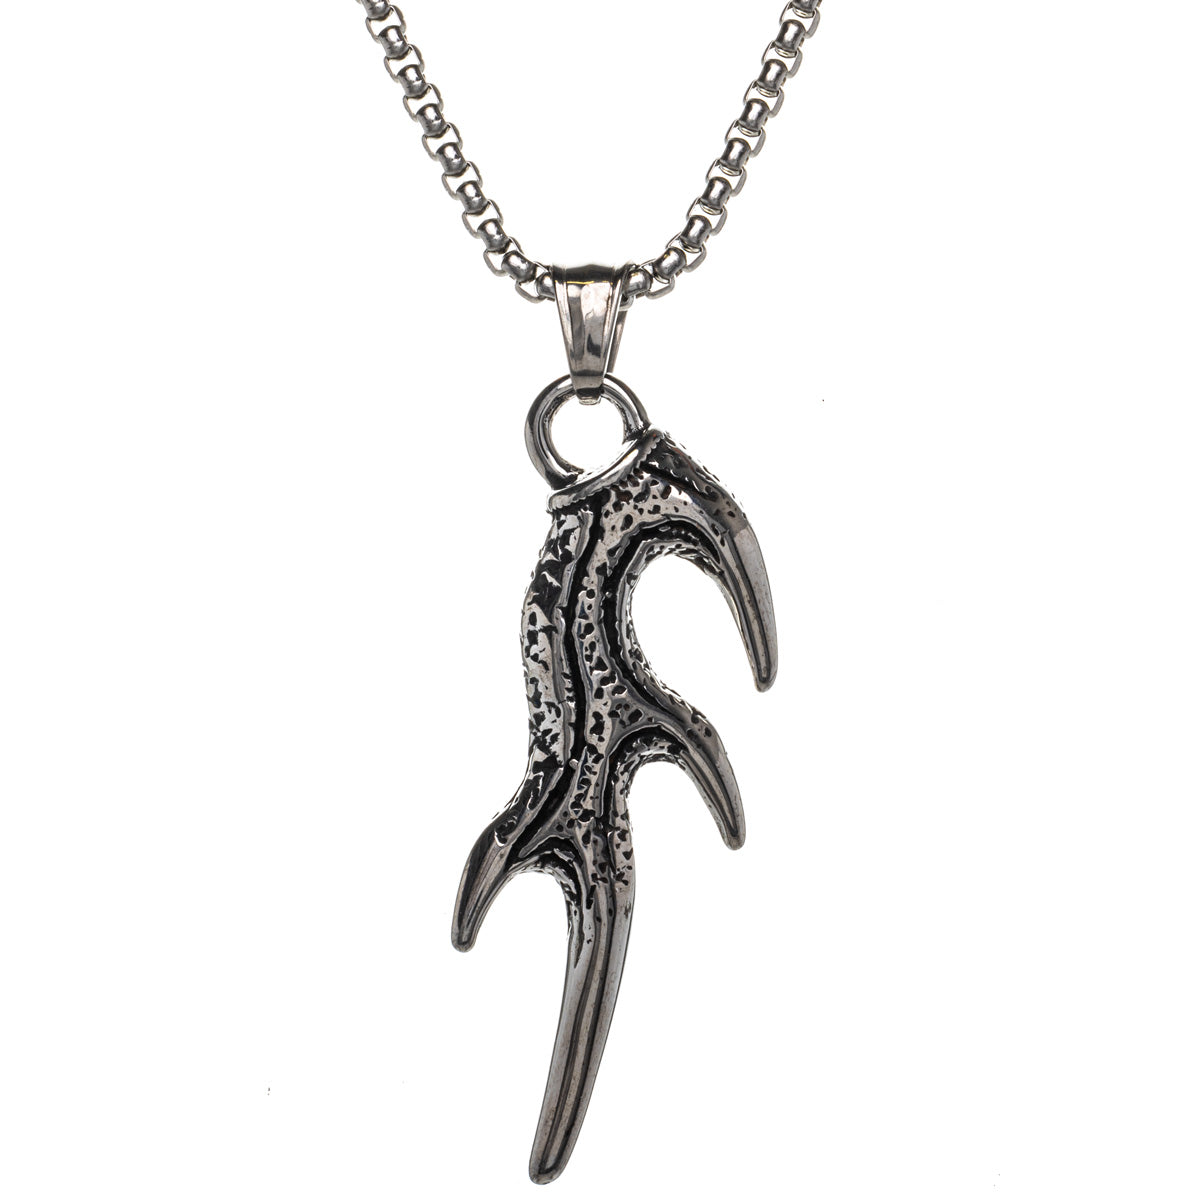 Reindeer horn pendant necklace (Steel 316L)